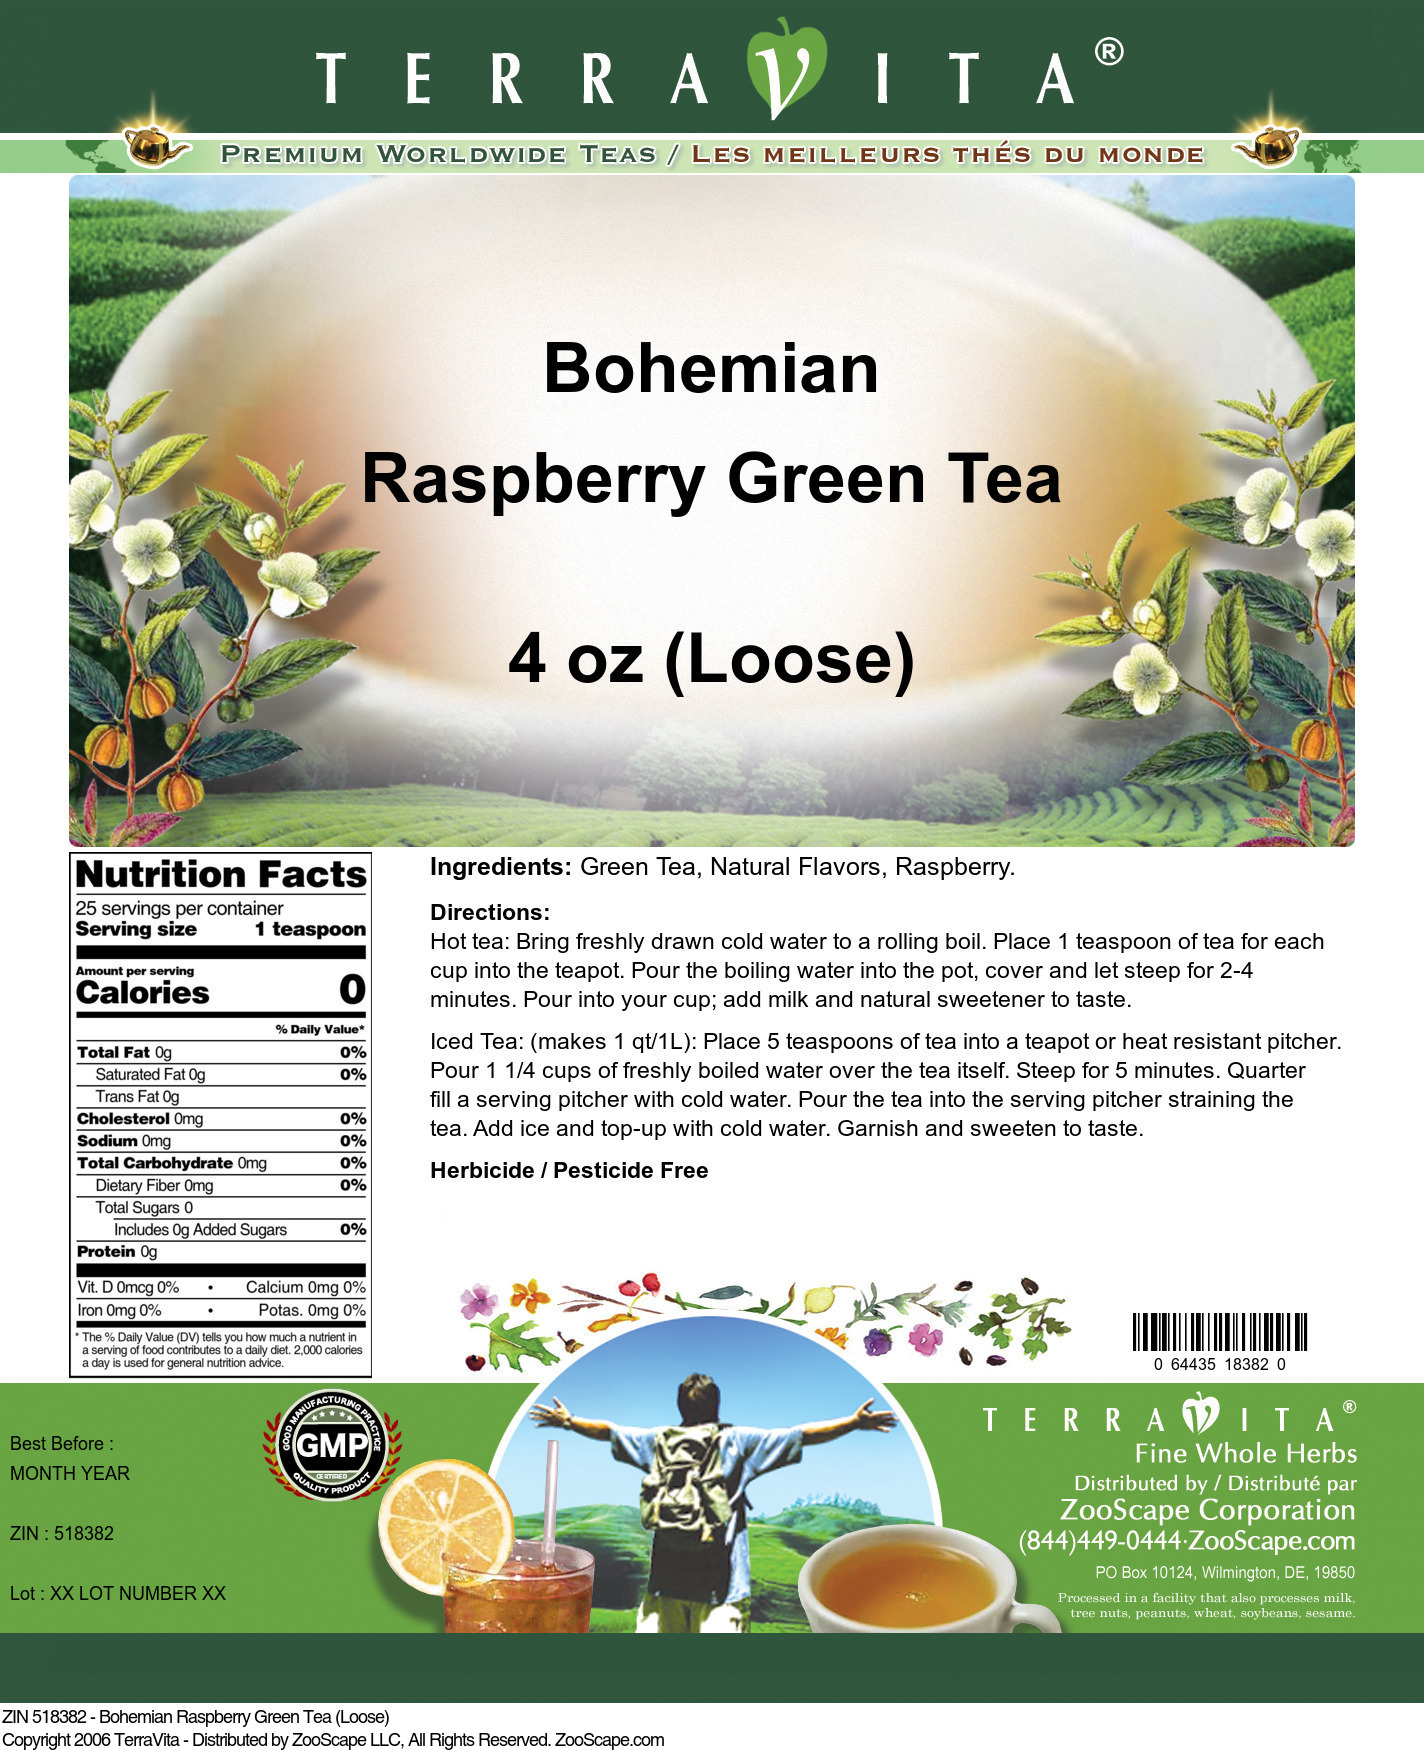 Bohemian Raspberry Green Tea (Loose) - Label